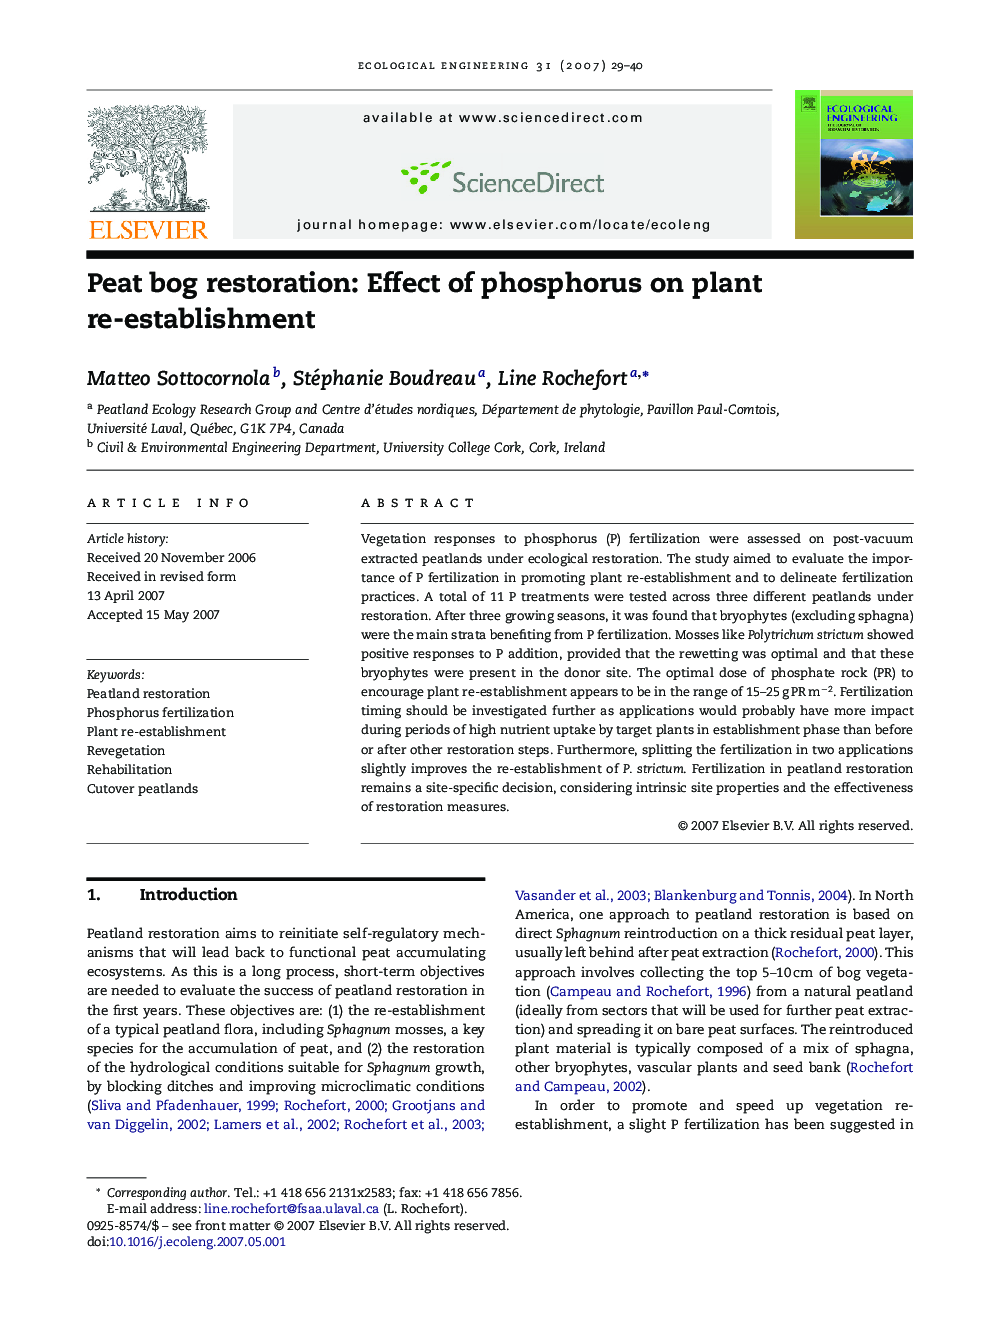 Peat bog restoration: Effect of phosphorus on plant re-establishment